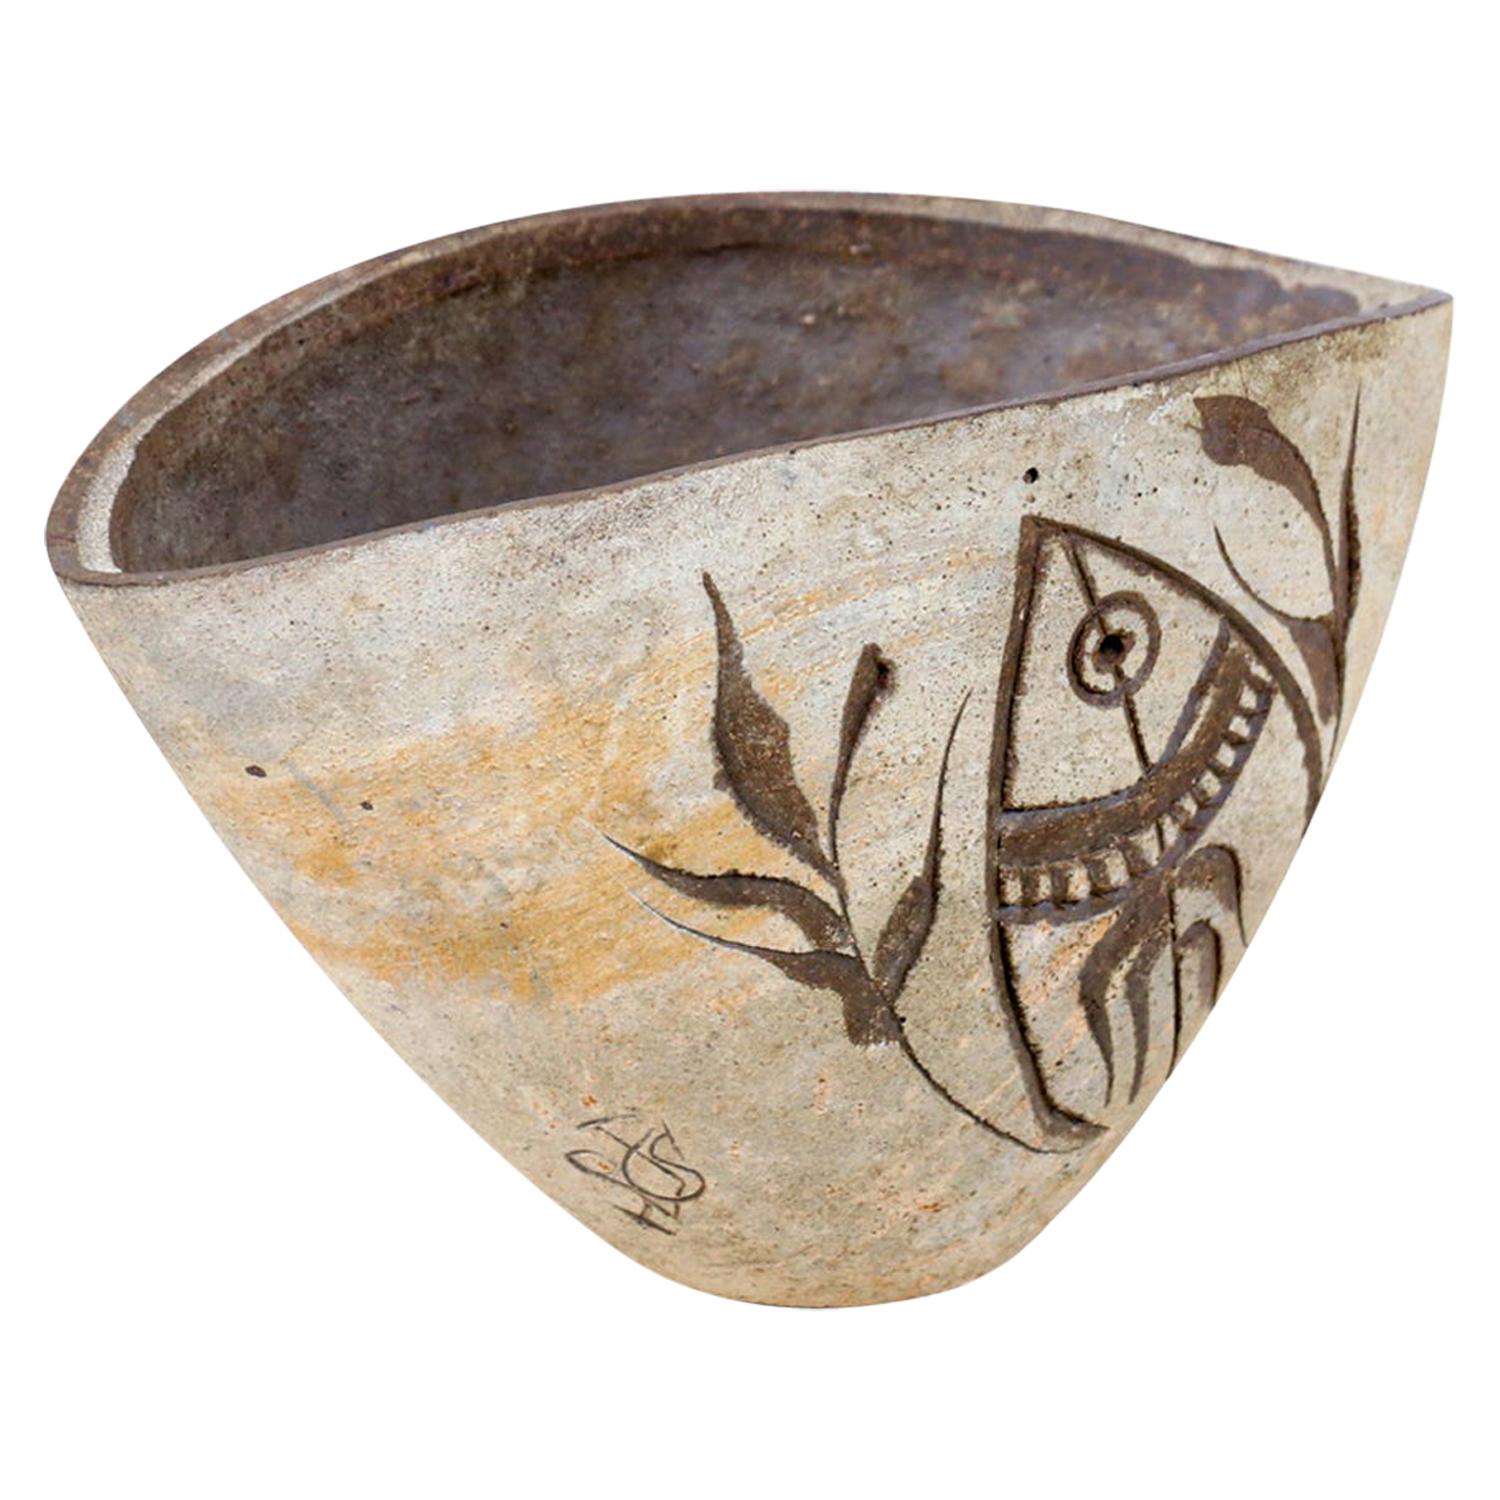 Paolo Soleri Ceramic Pottery Vessel from Arcosanti For Sale